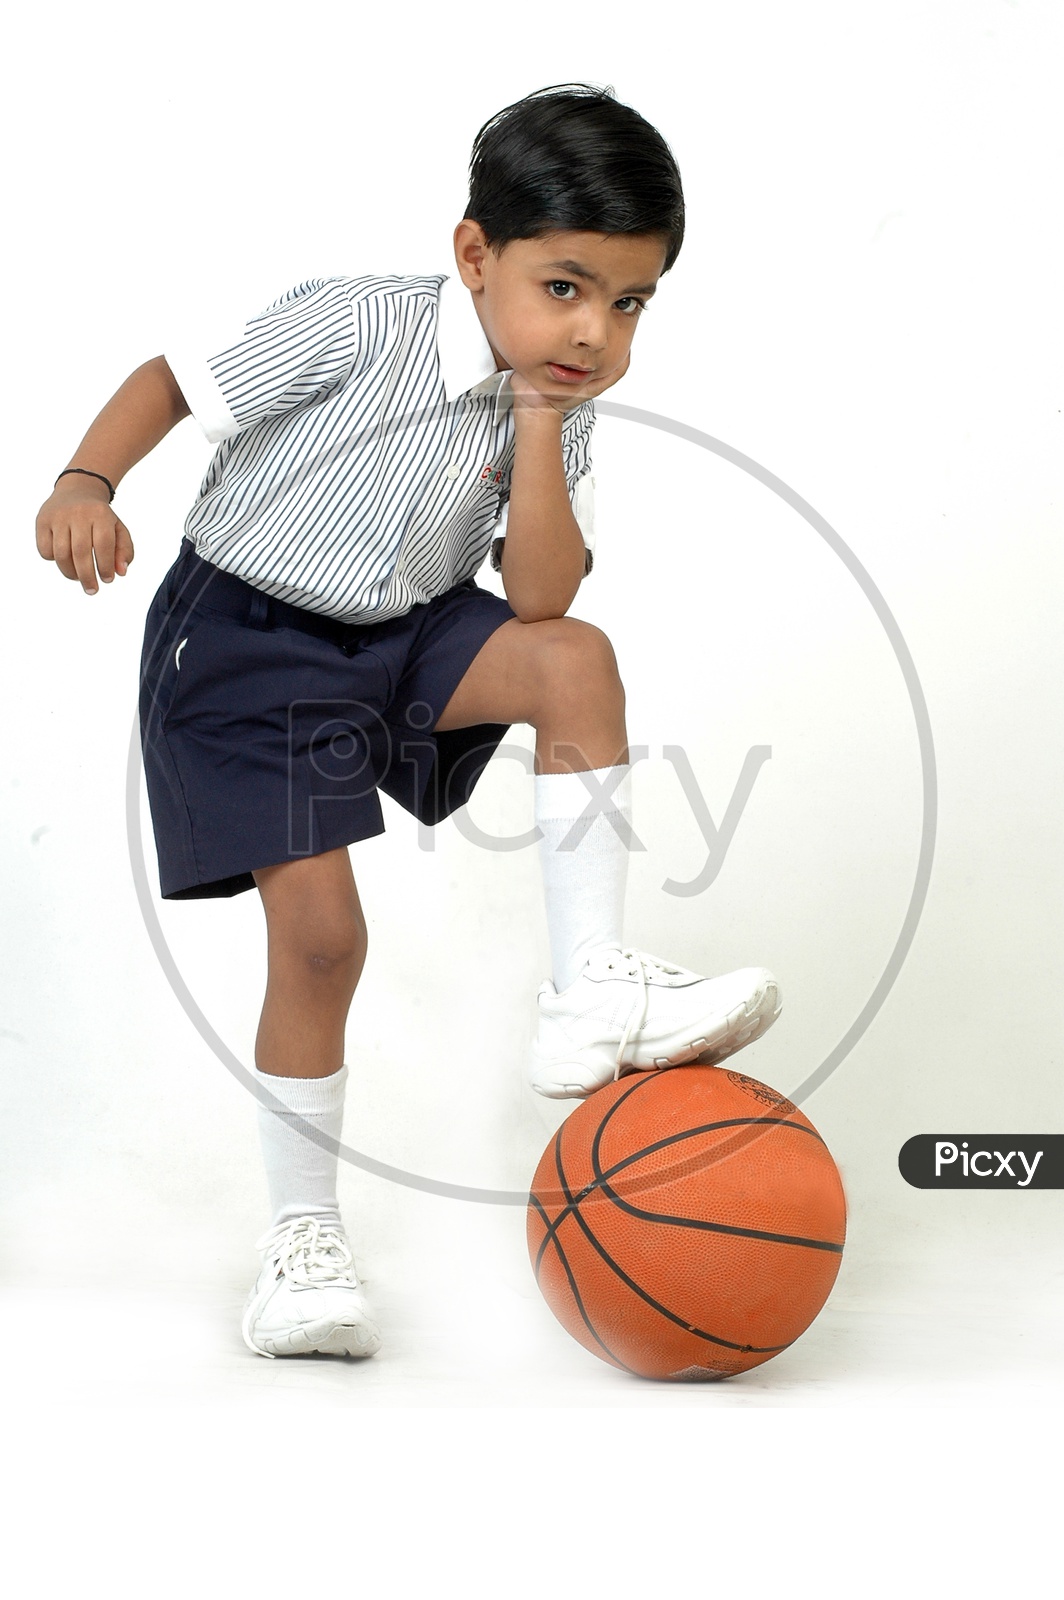 Indian boy wearing school uniform with basket ball